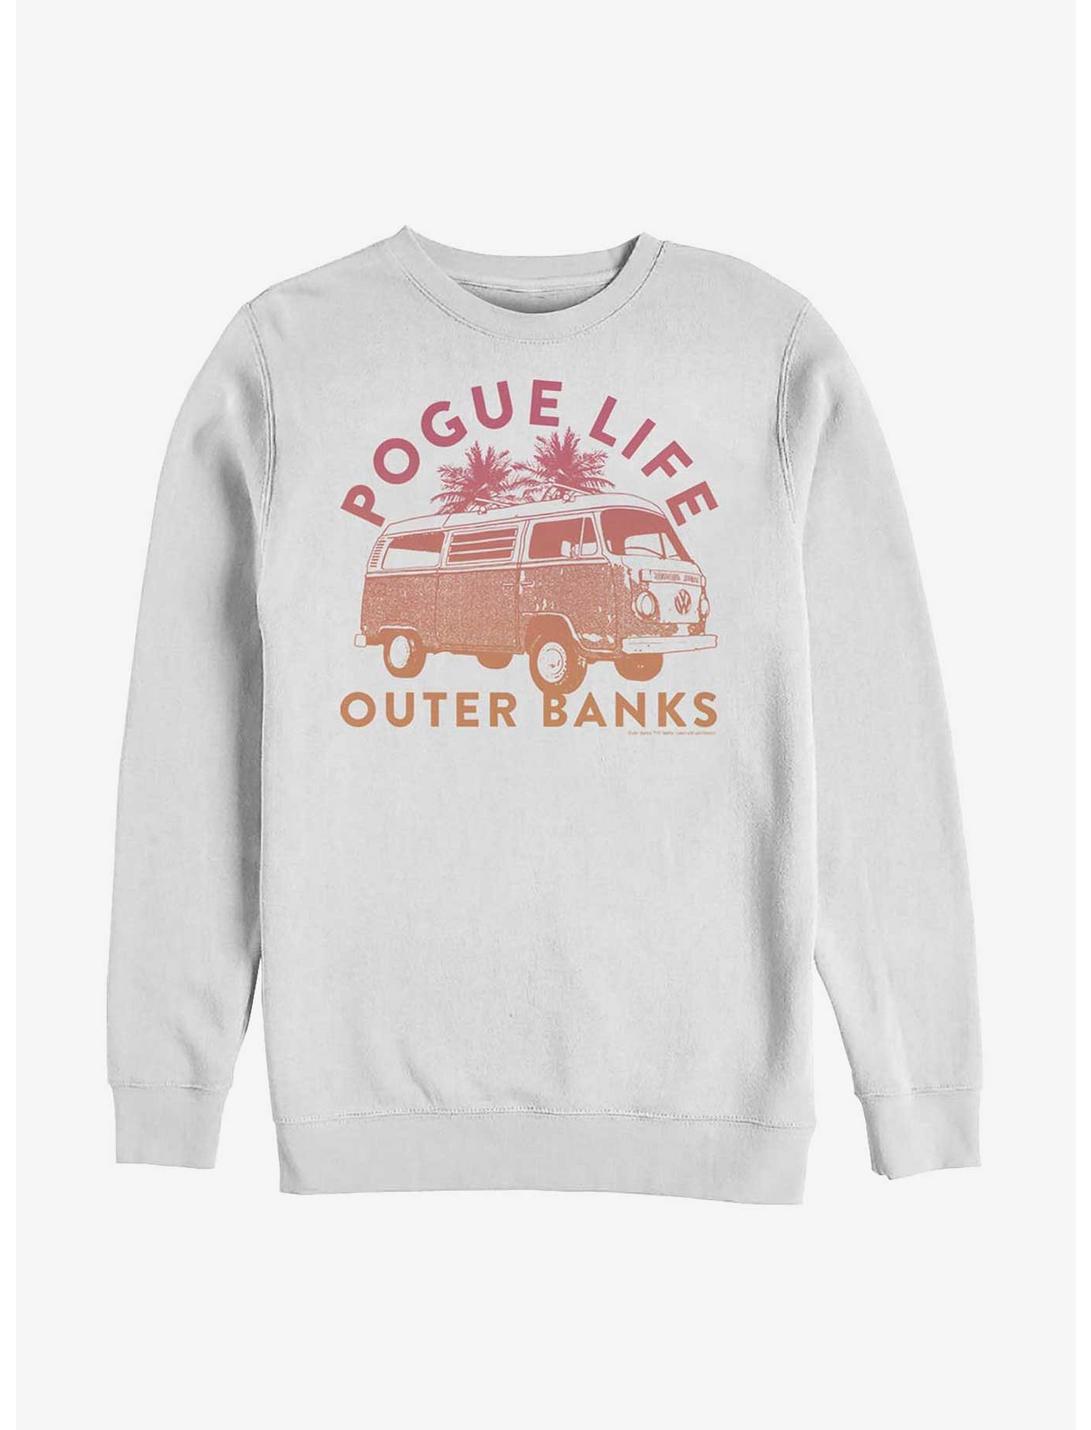 Outer Banks Pogue Life Sweatshirt, WHITE, hi-res